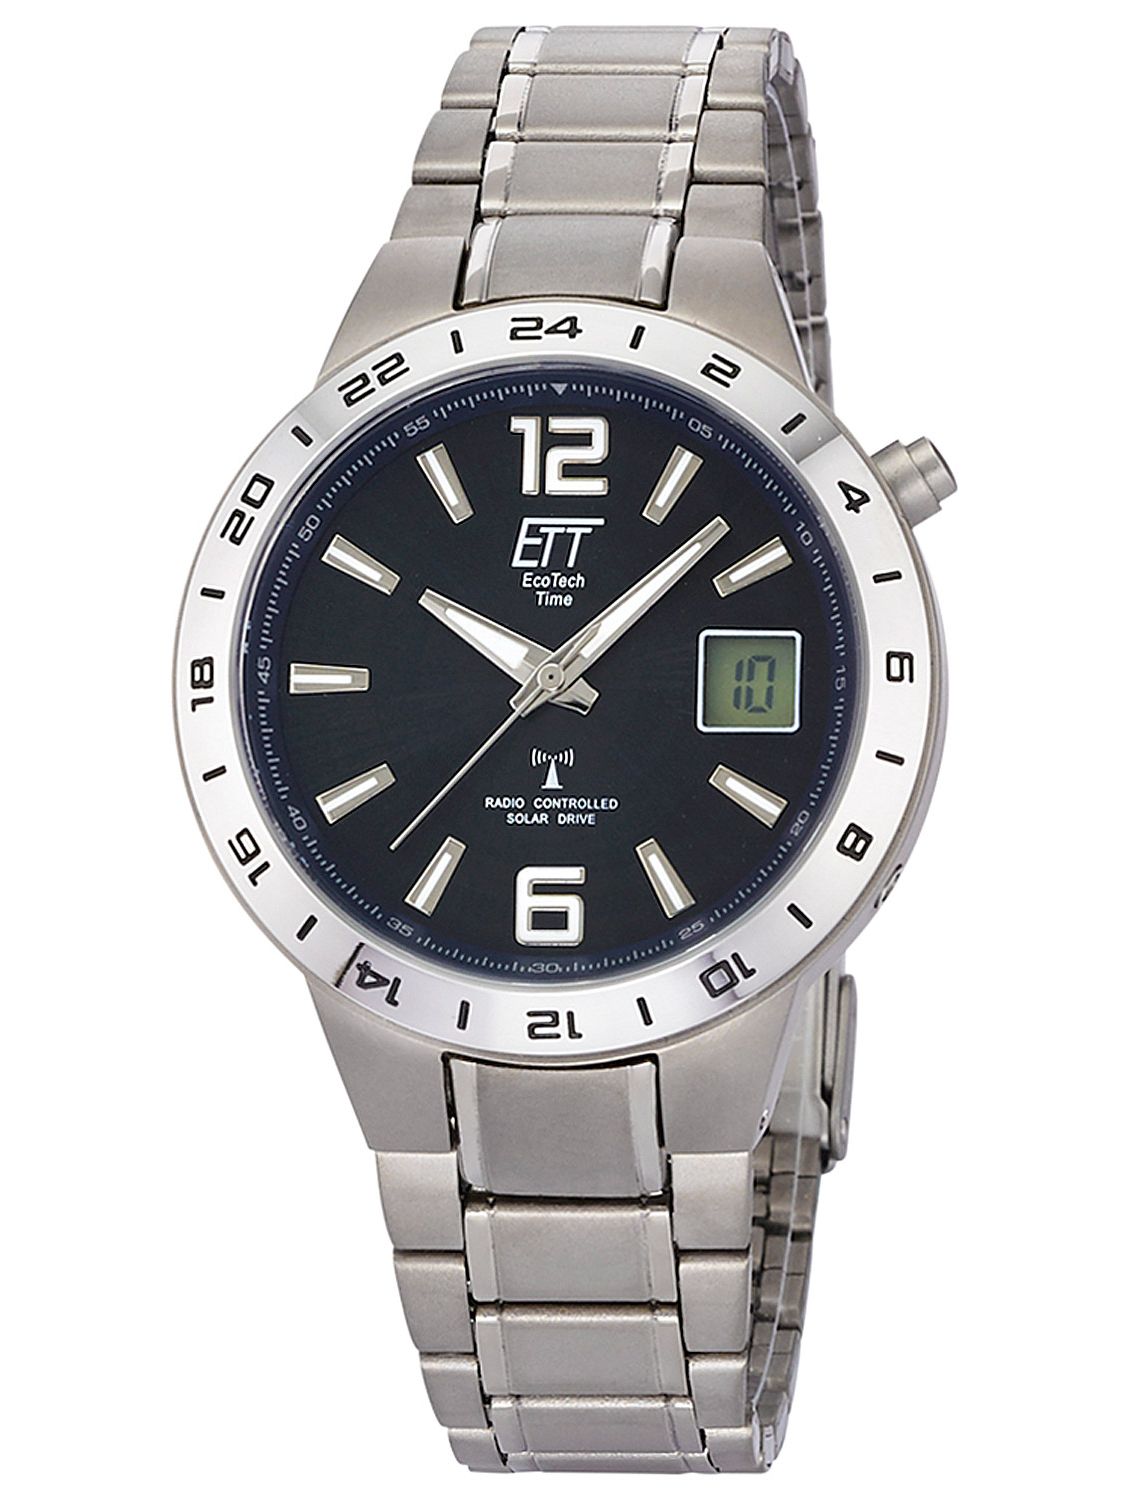 ETT Eco Tech Time Solar Radio-Controlled Watch Titanium EGT-11411-41M •  uhrcenter